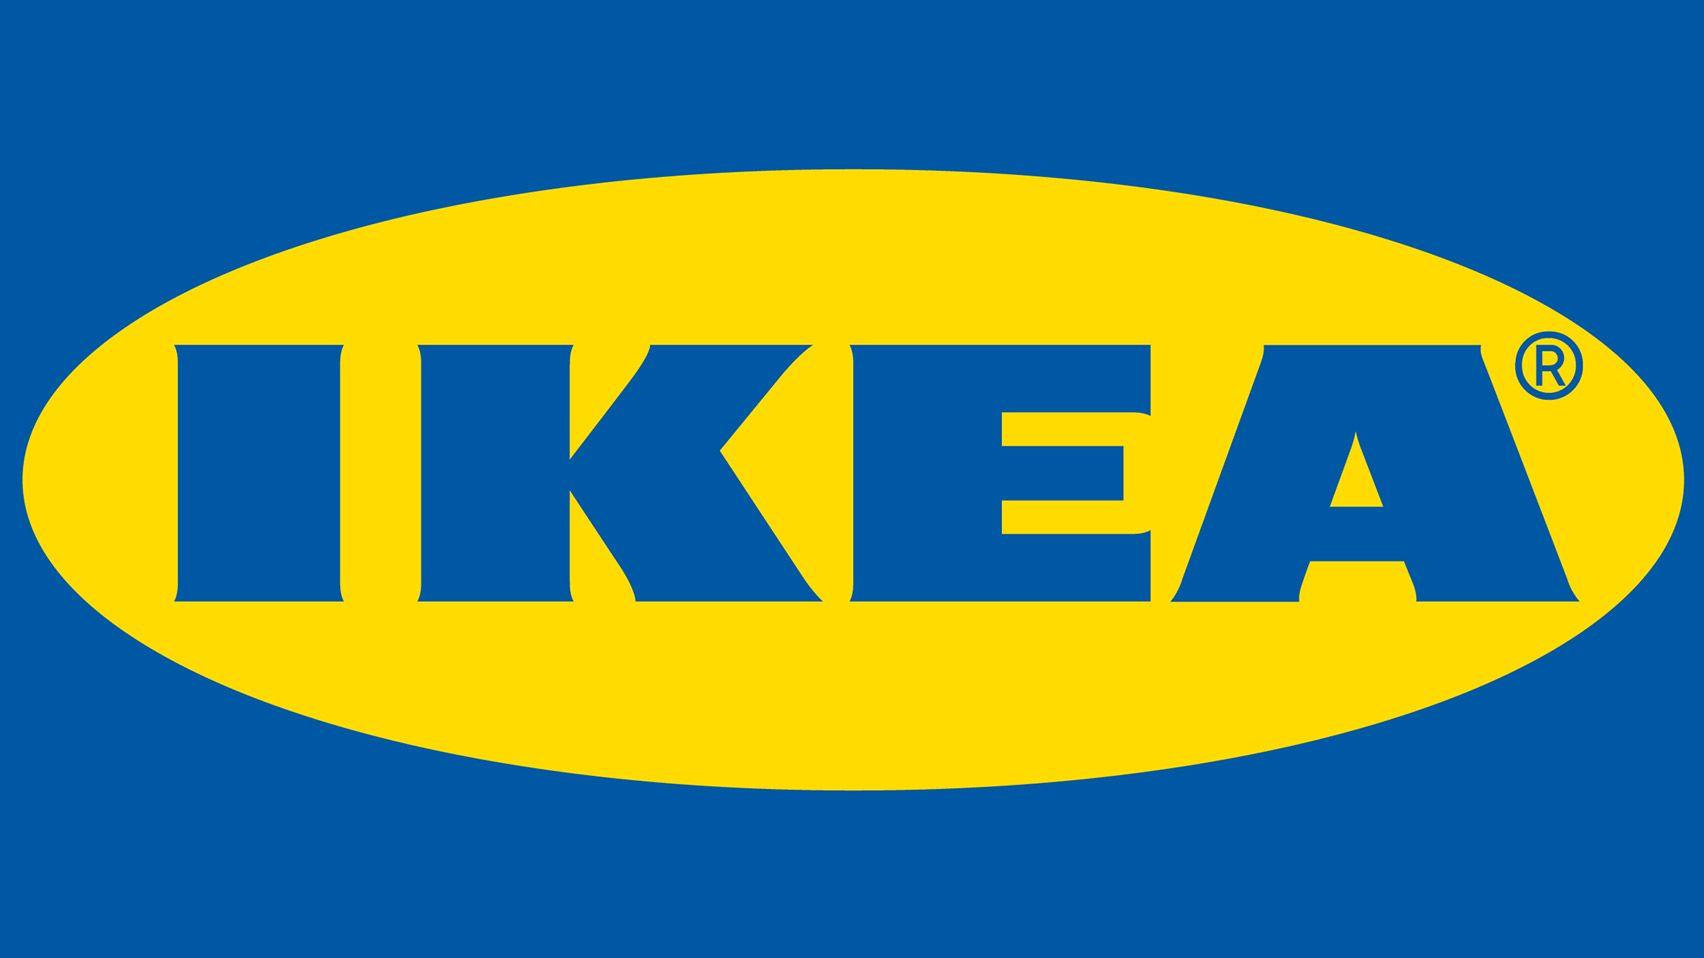 Static Logo - IKEA logo made 